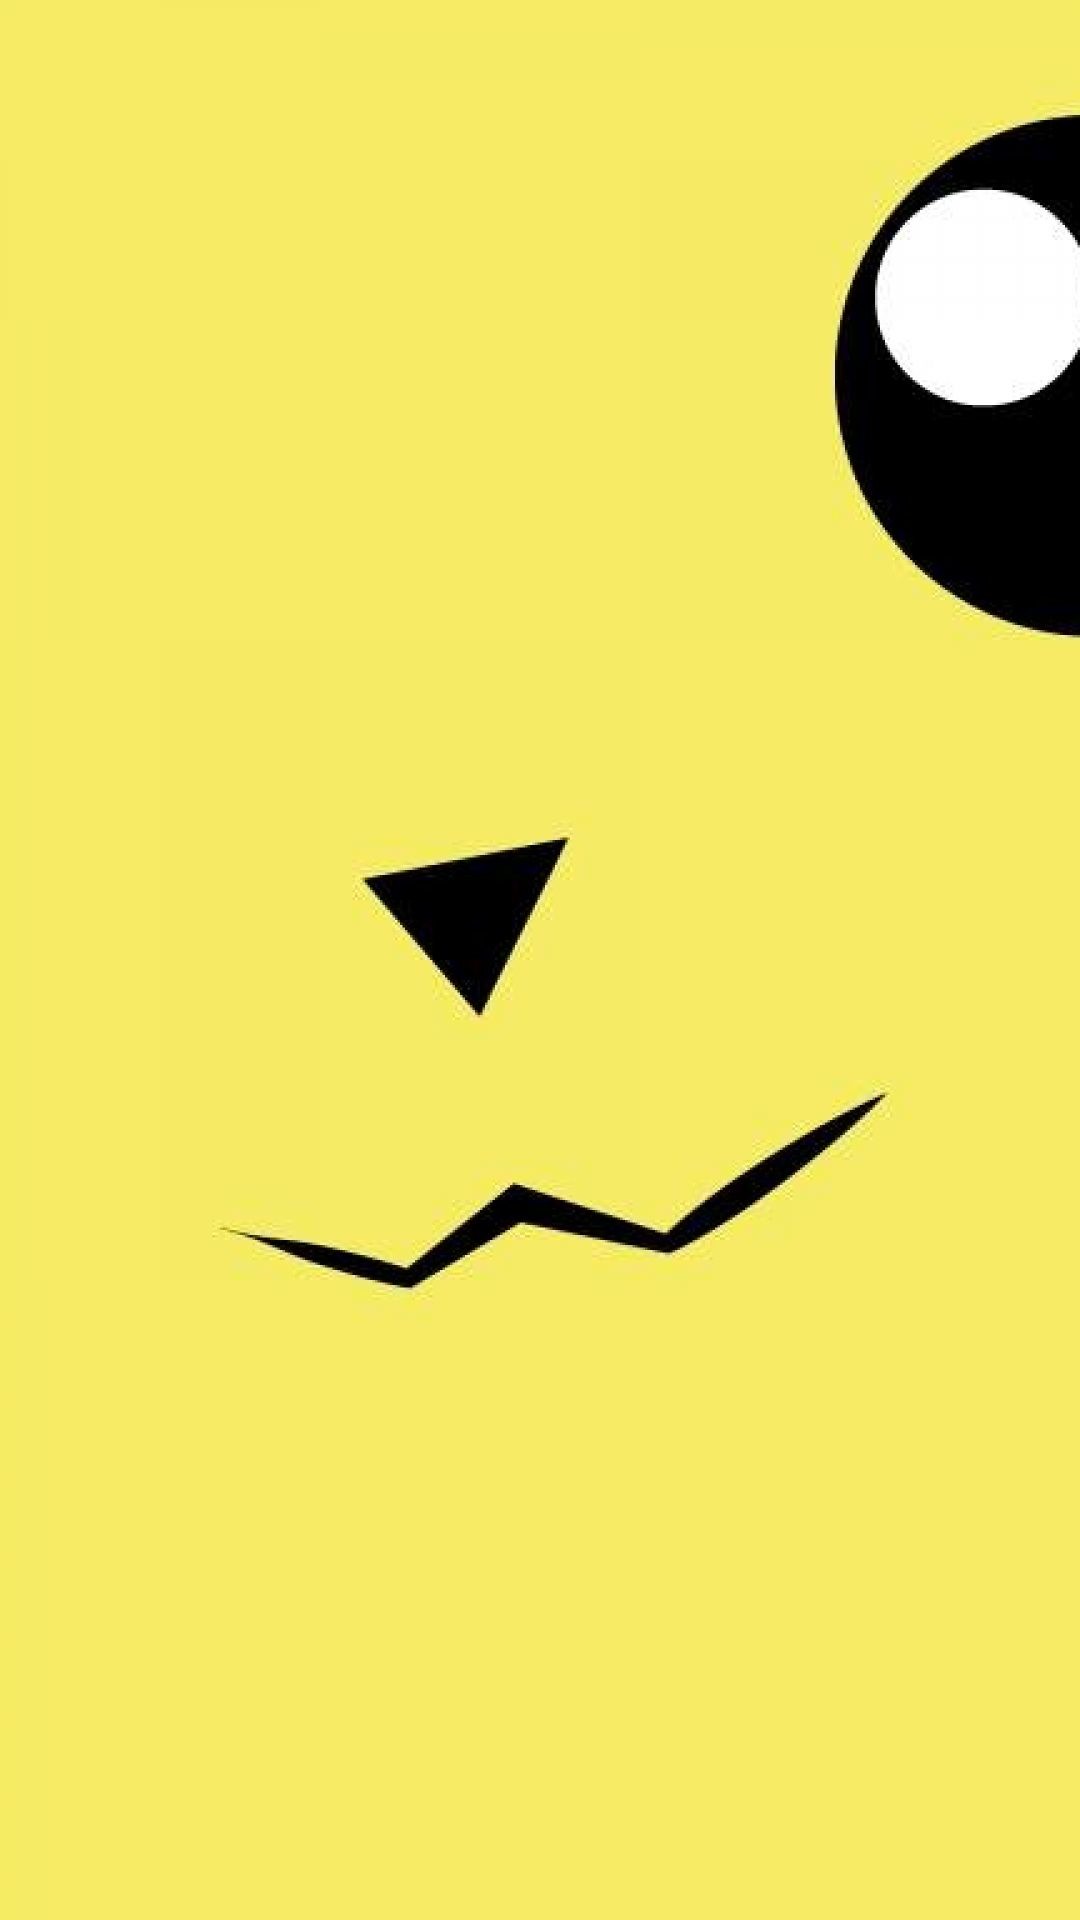 Pikachu Hd Wallpapers